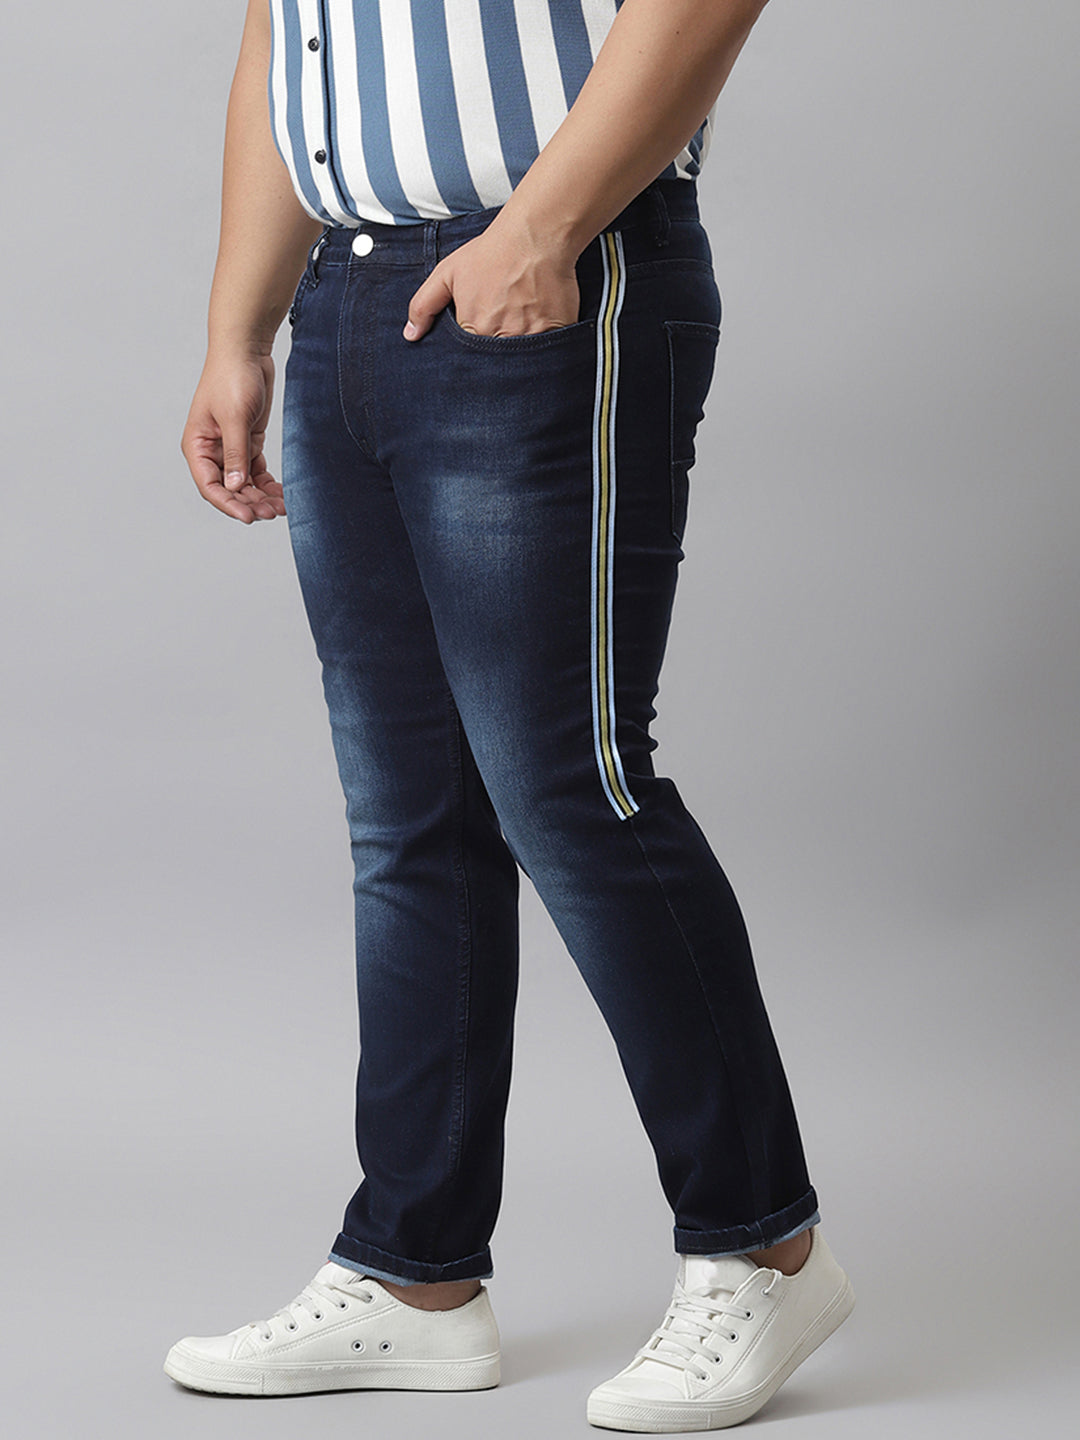 Striped Stylish Casual Denim Jeans